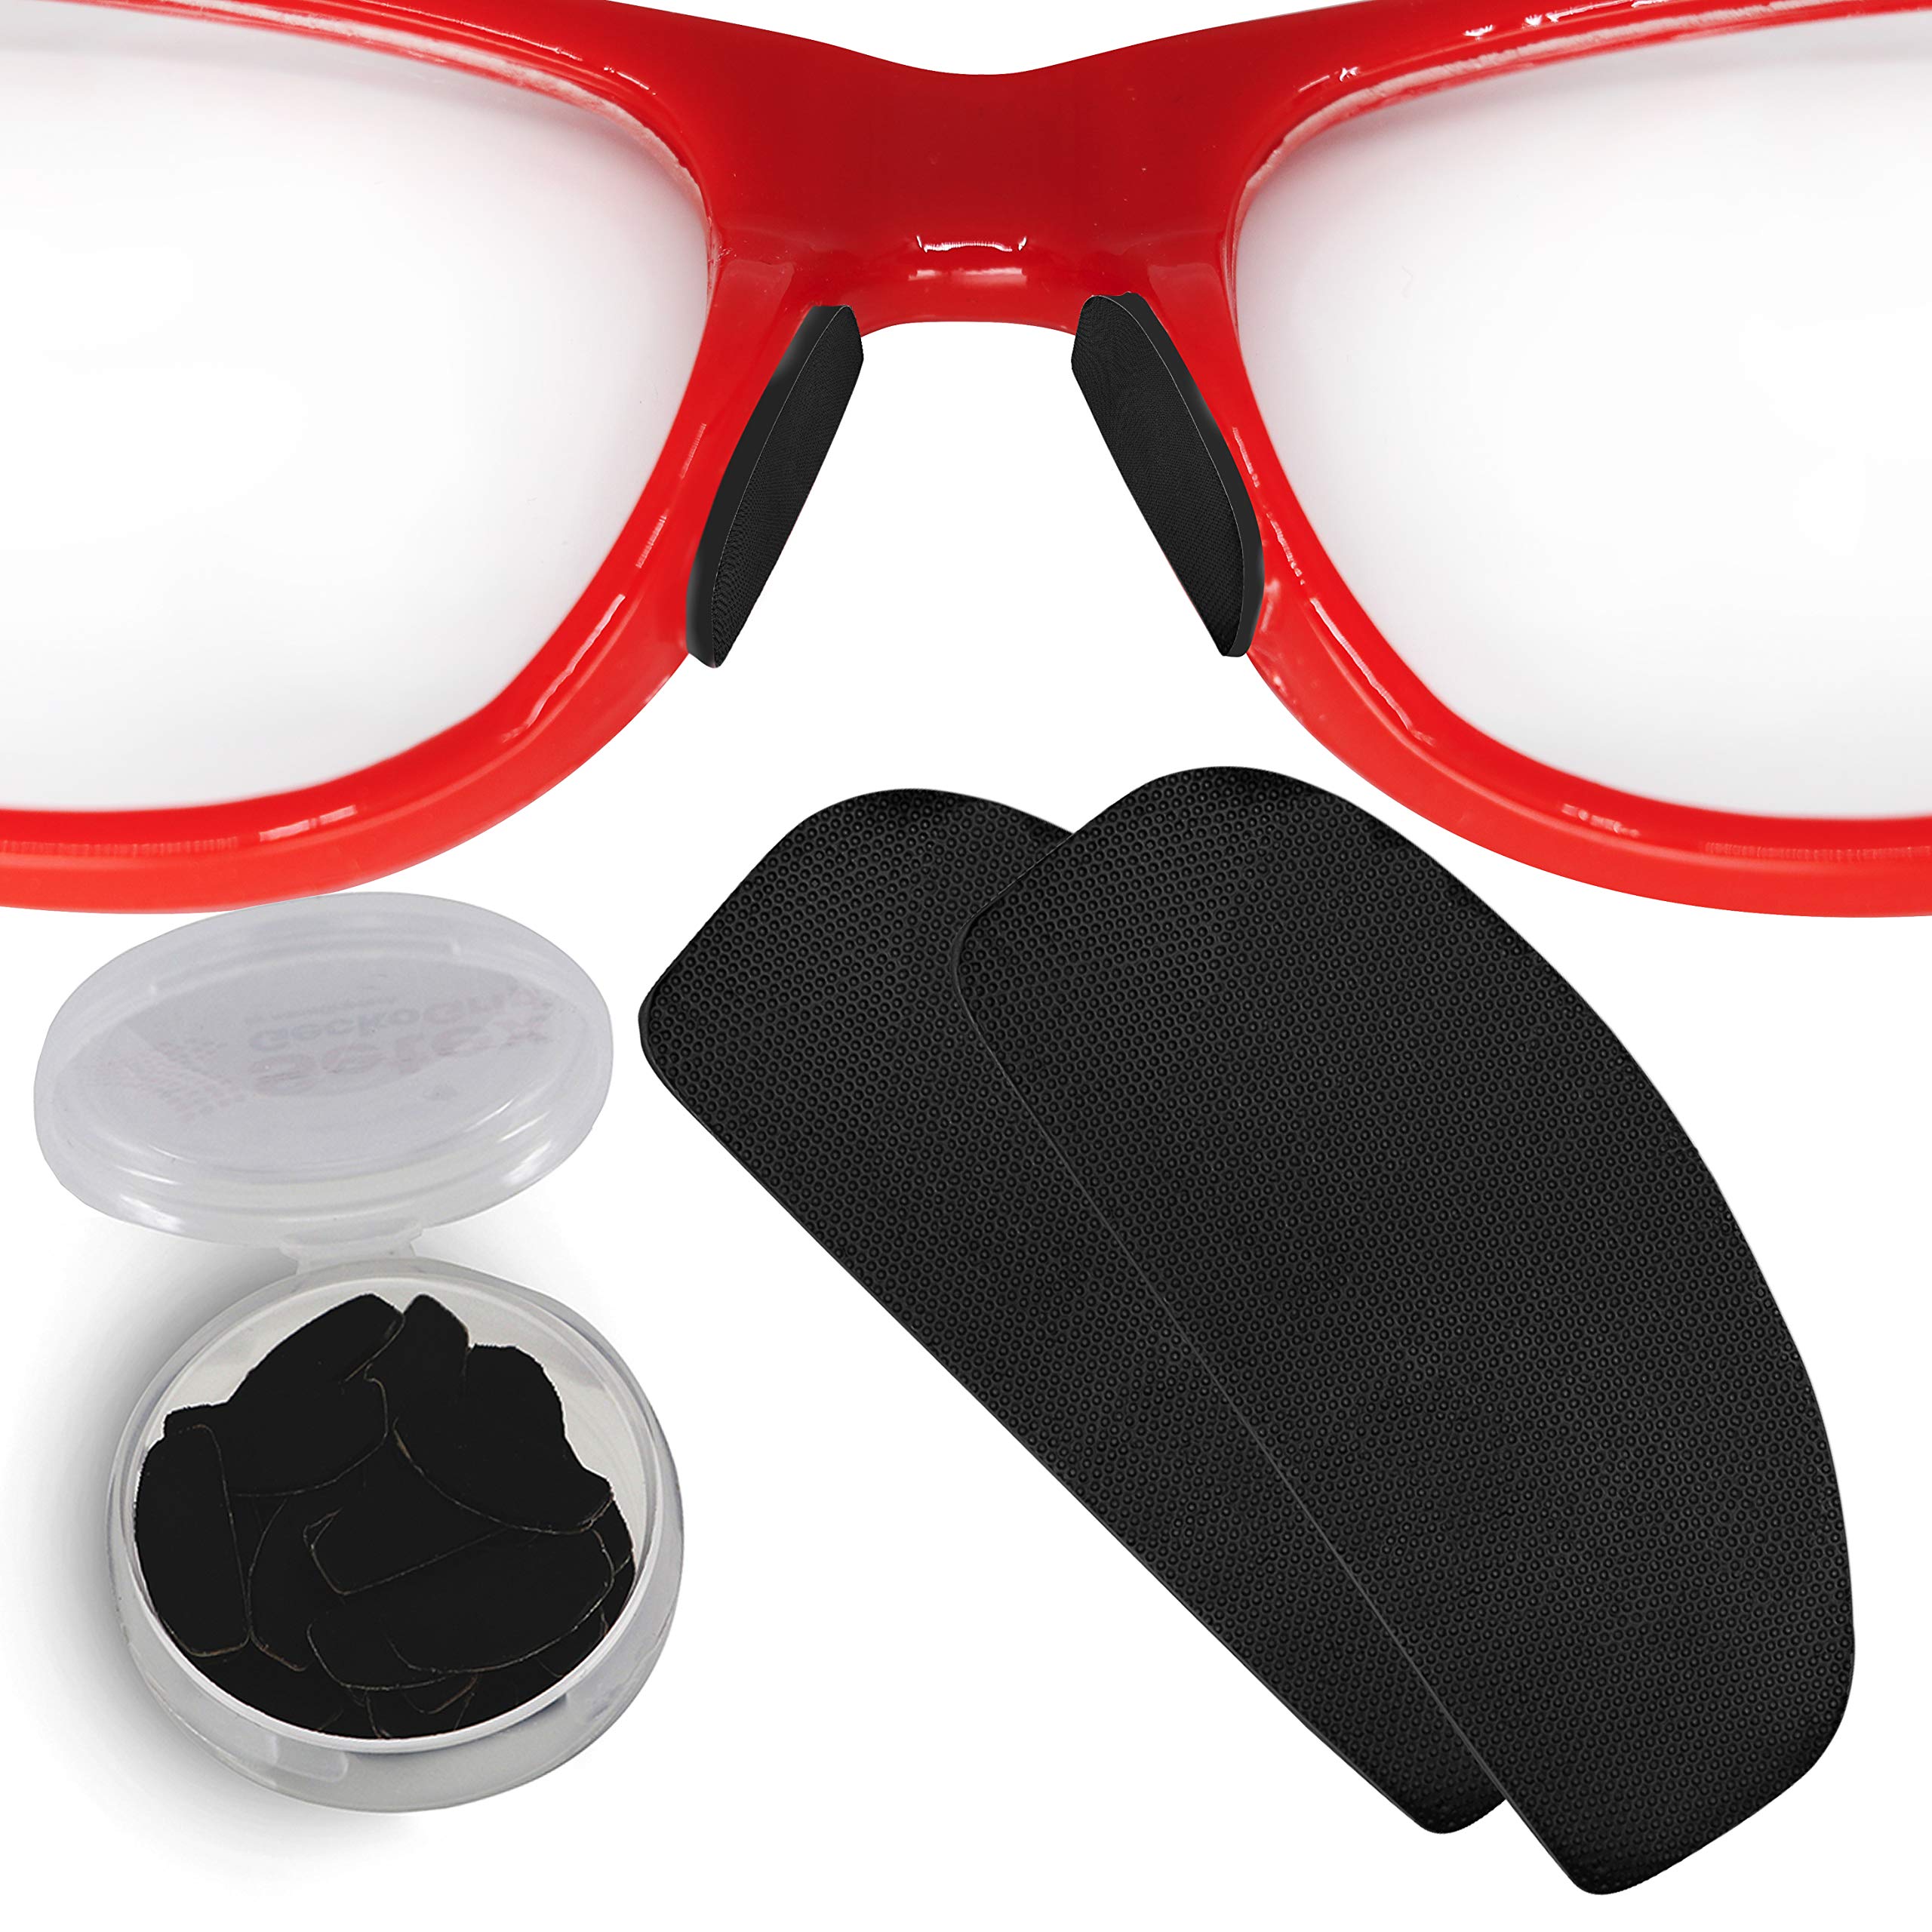  Setex Gecko Grip Ultra-Thin 0.6mm Anti Slip Eyeglass